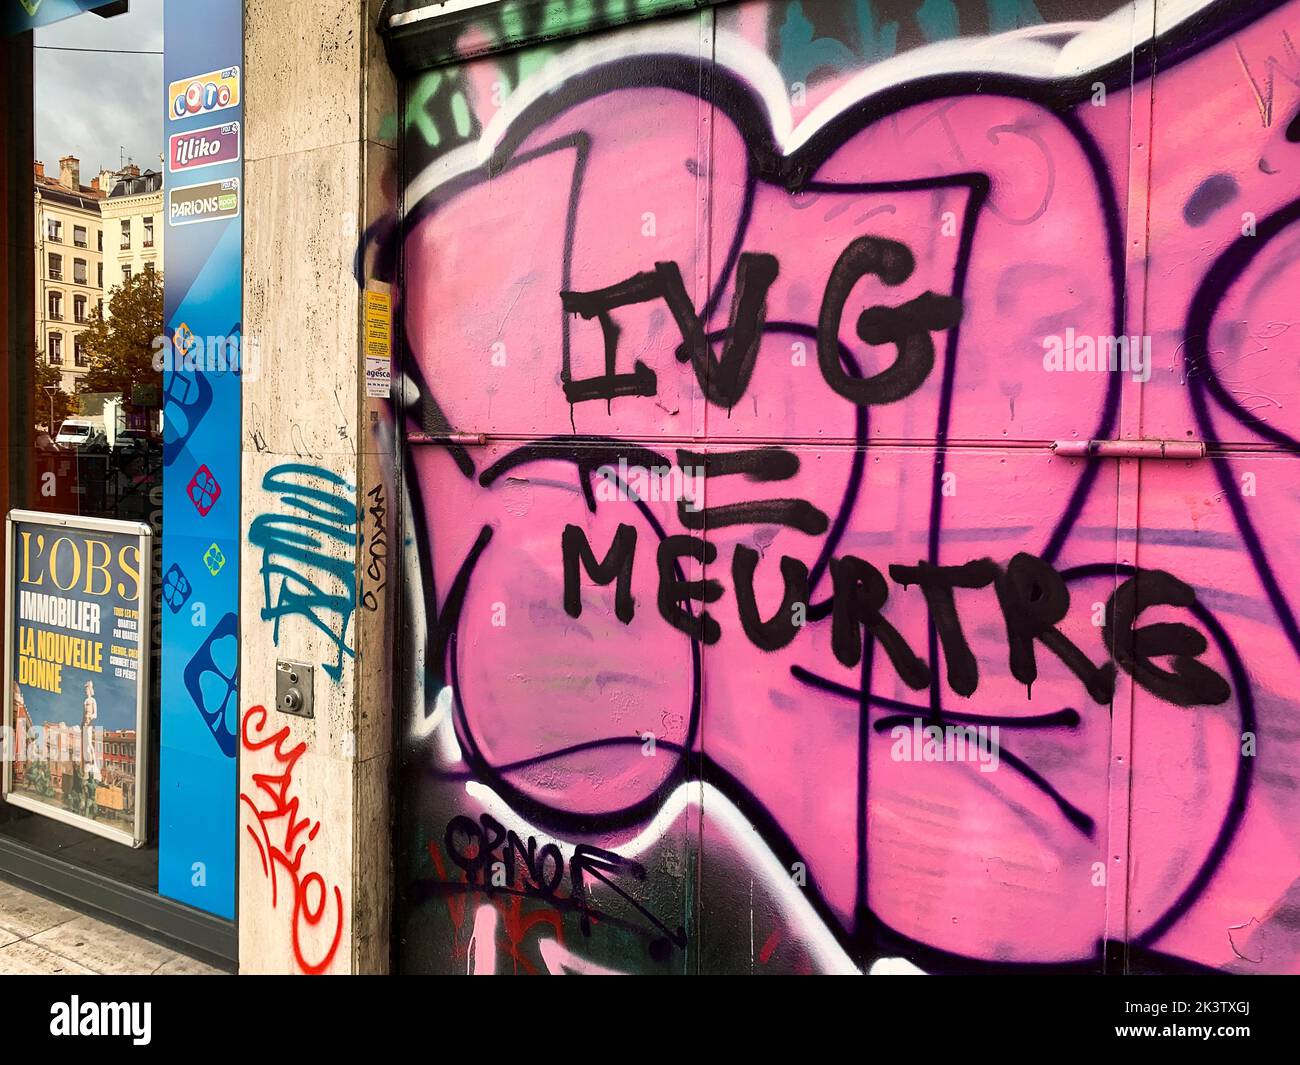 Anti-IVG graffiti, Lyon, France Stock Photo